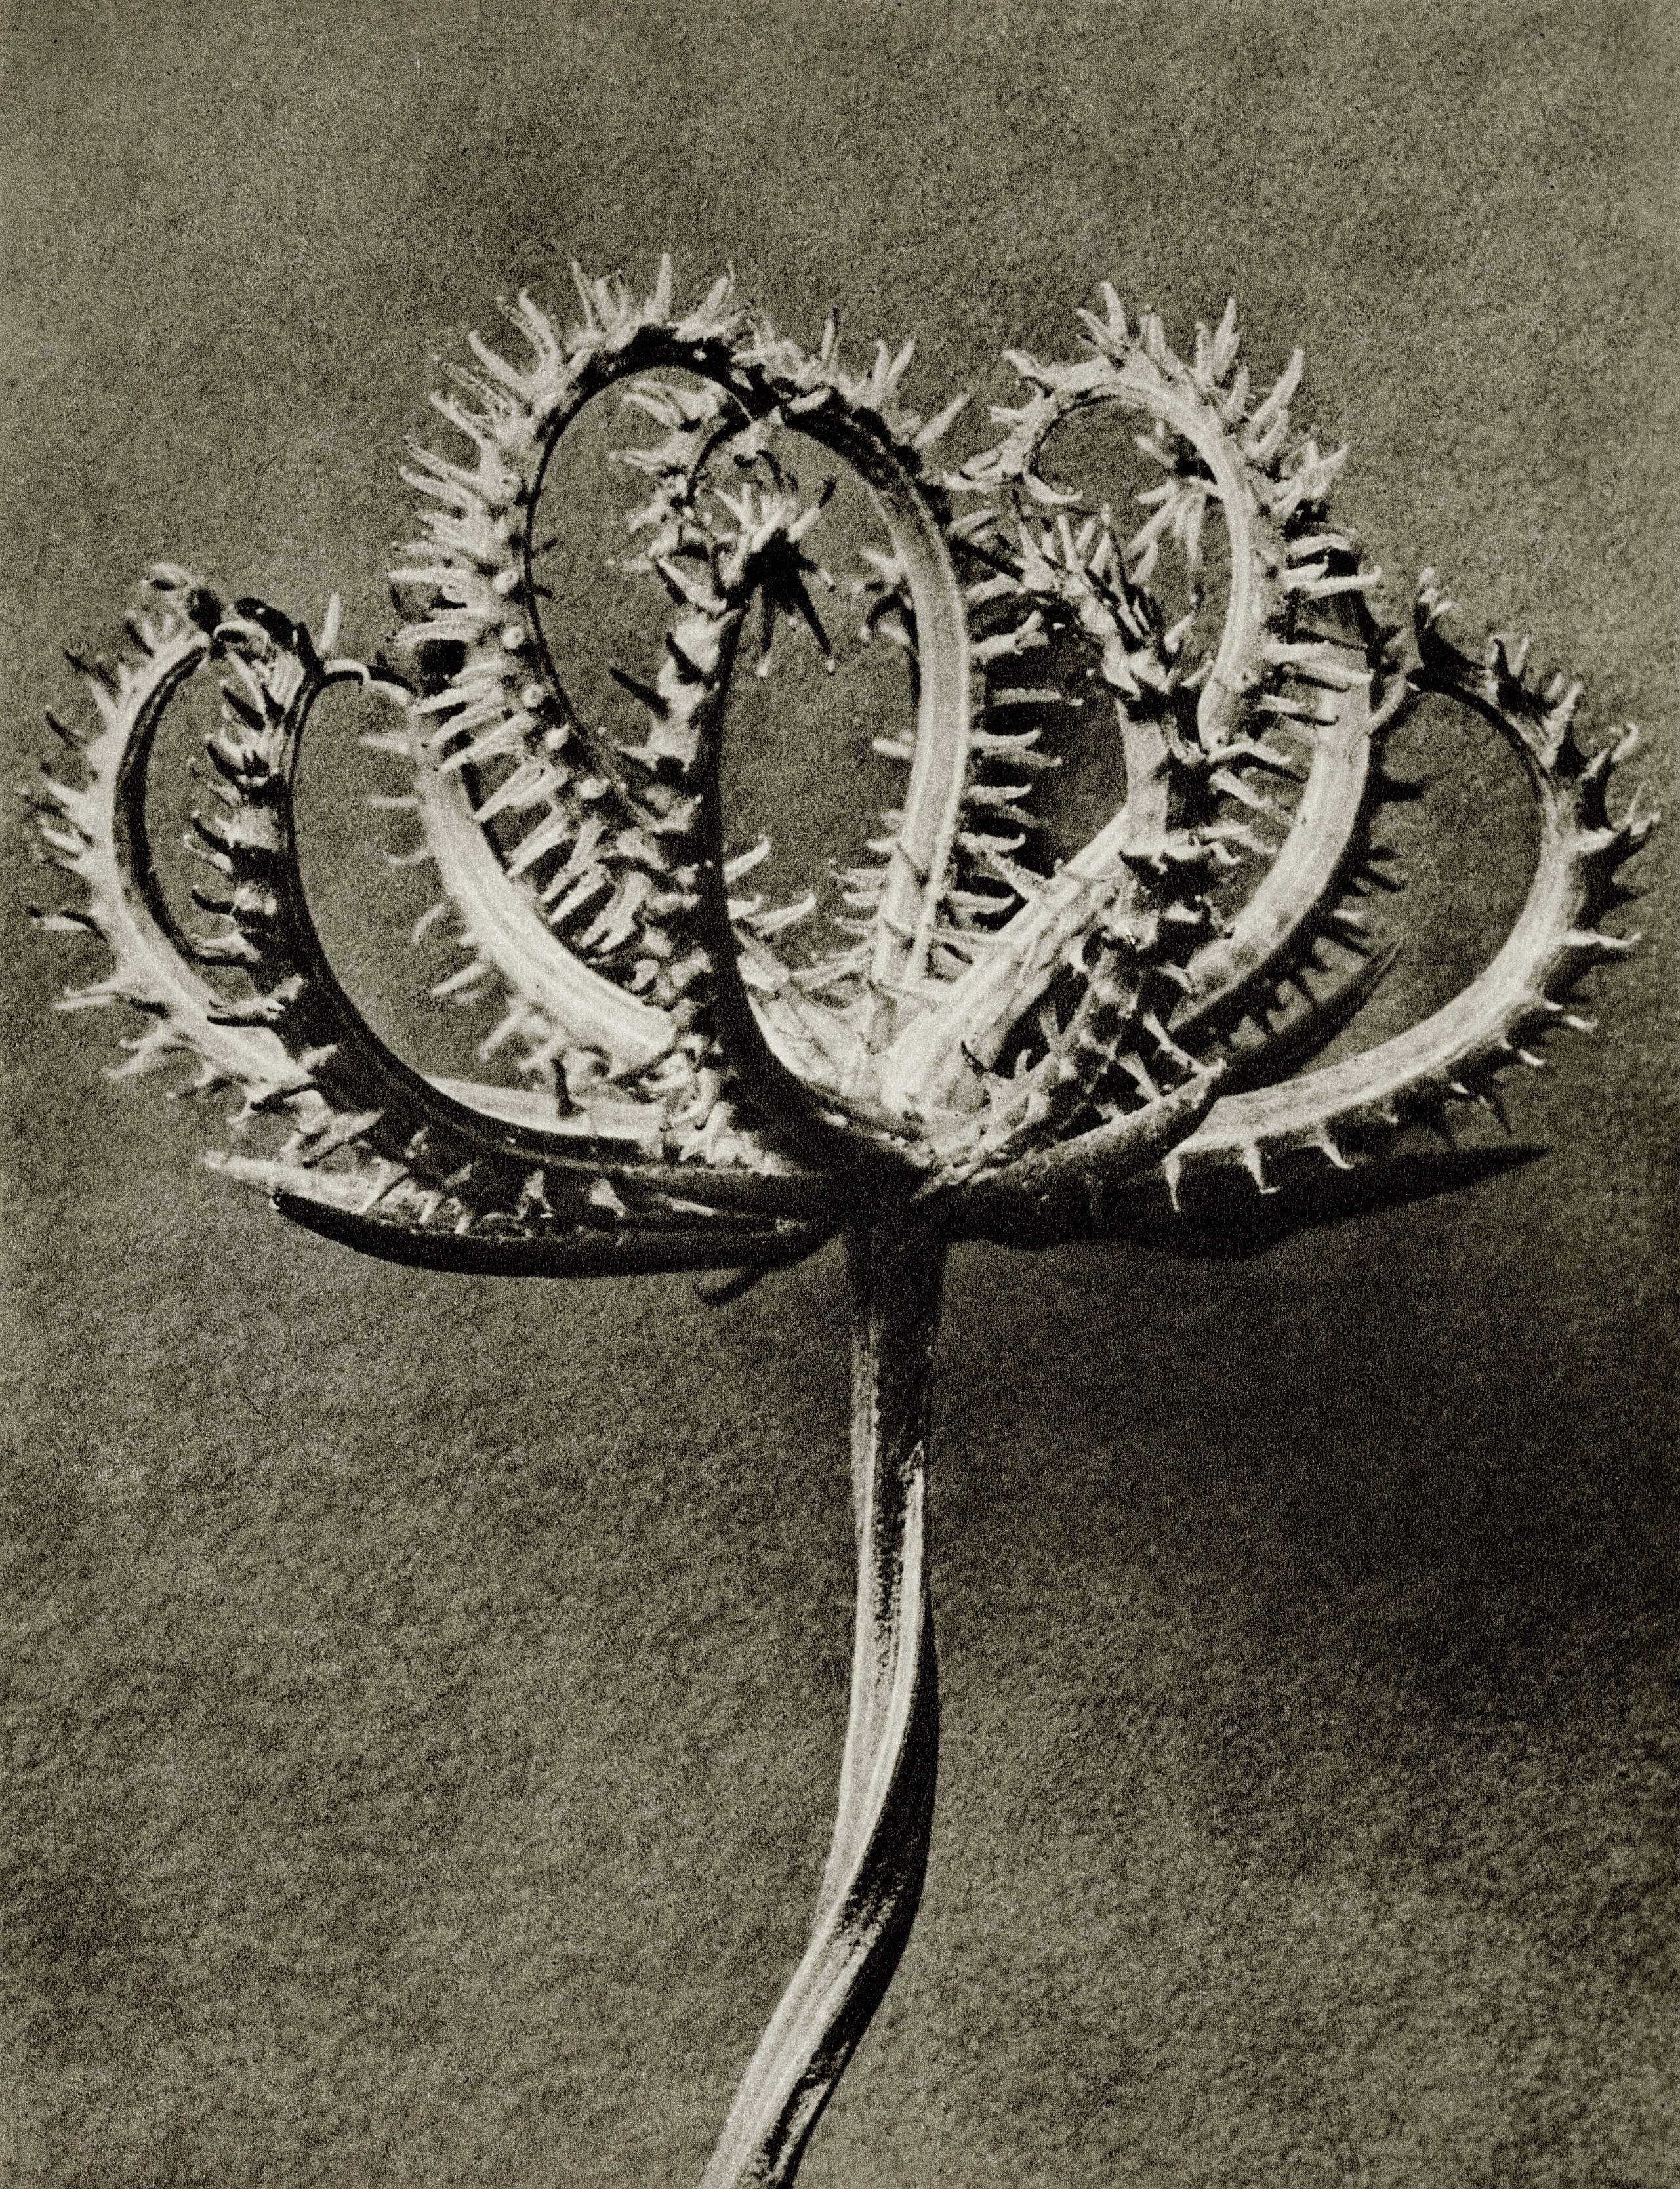 Karl Blossfeldt Black and White Photograph - Plate 53 - Koelpinia linearis (Compositae) seed head 